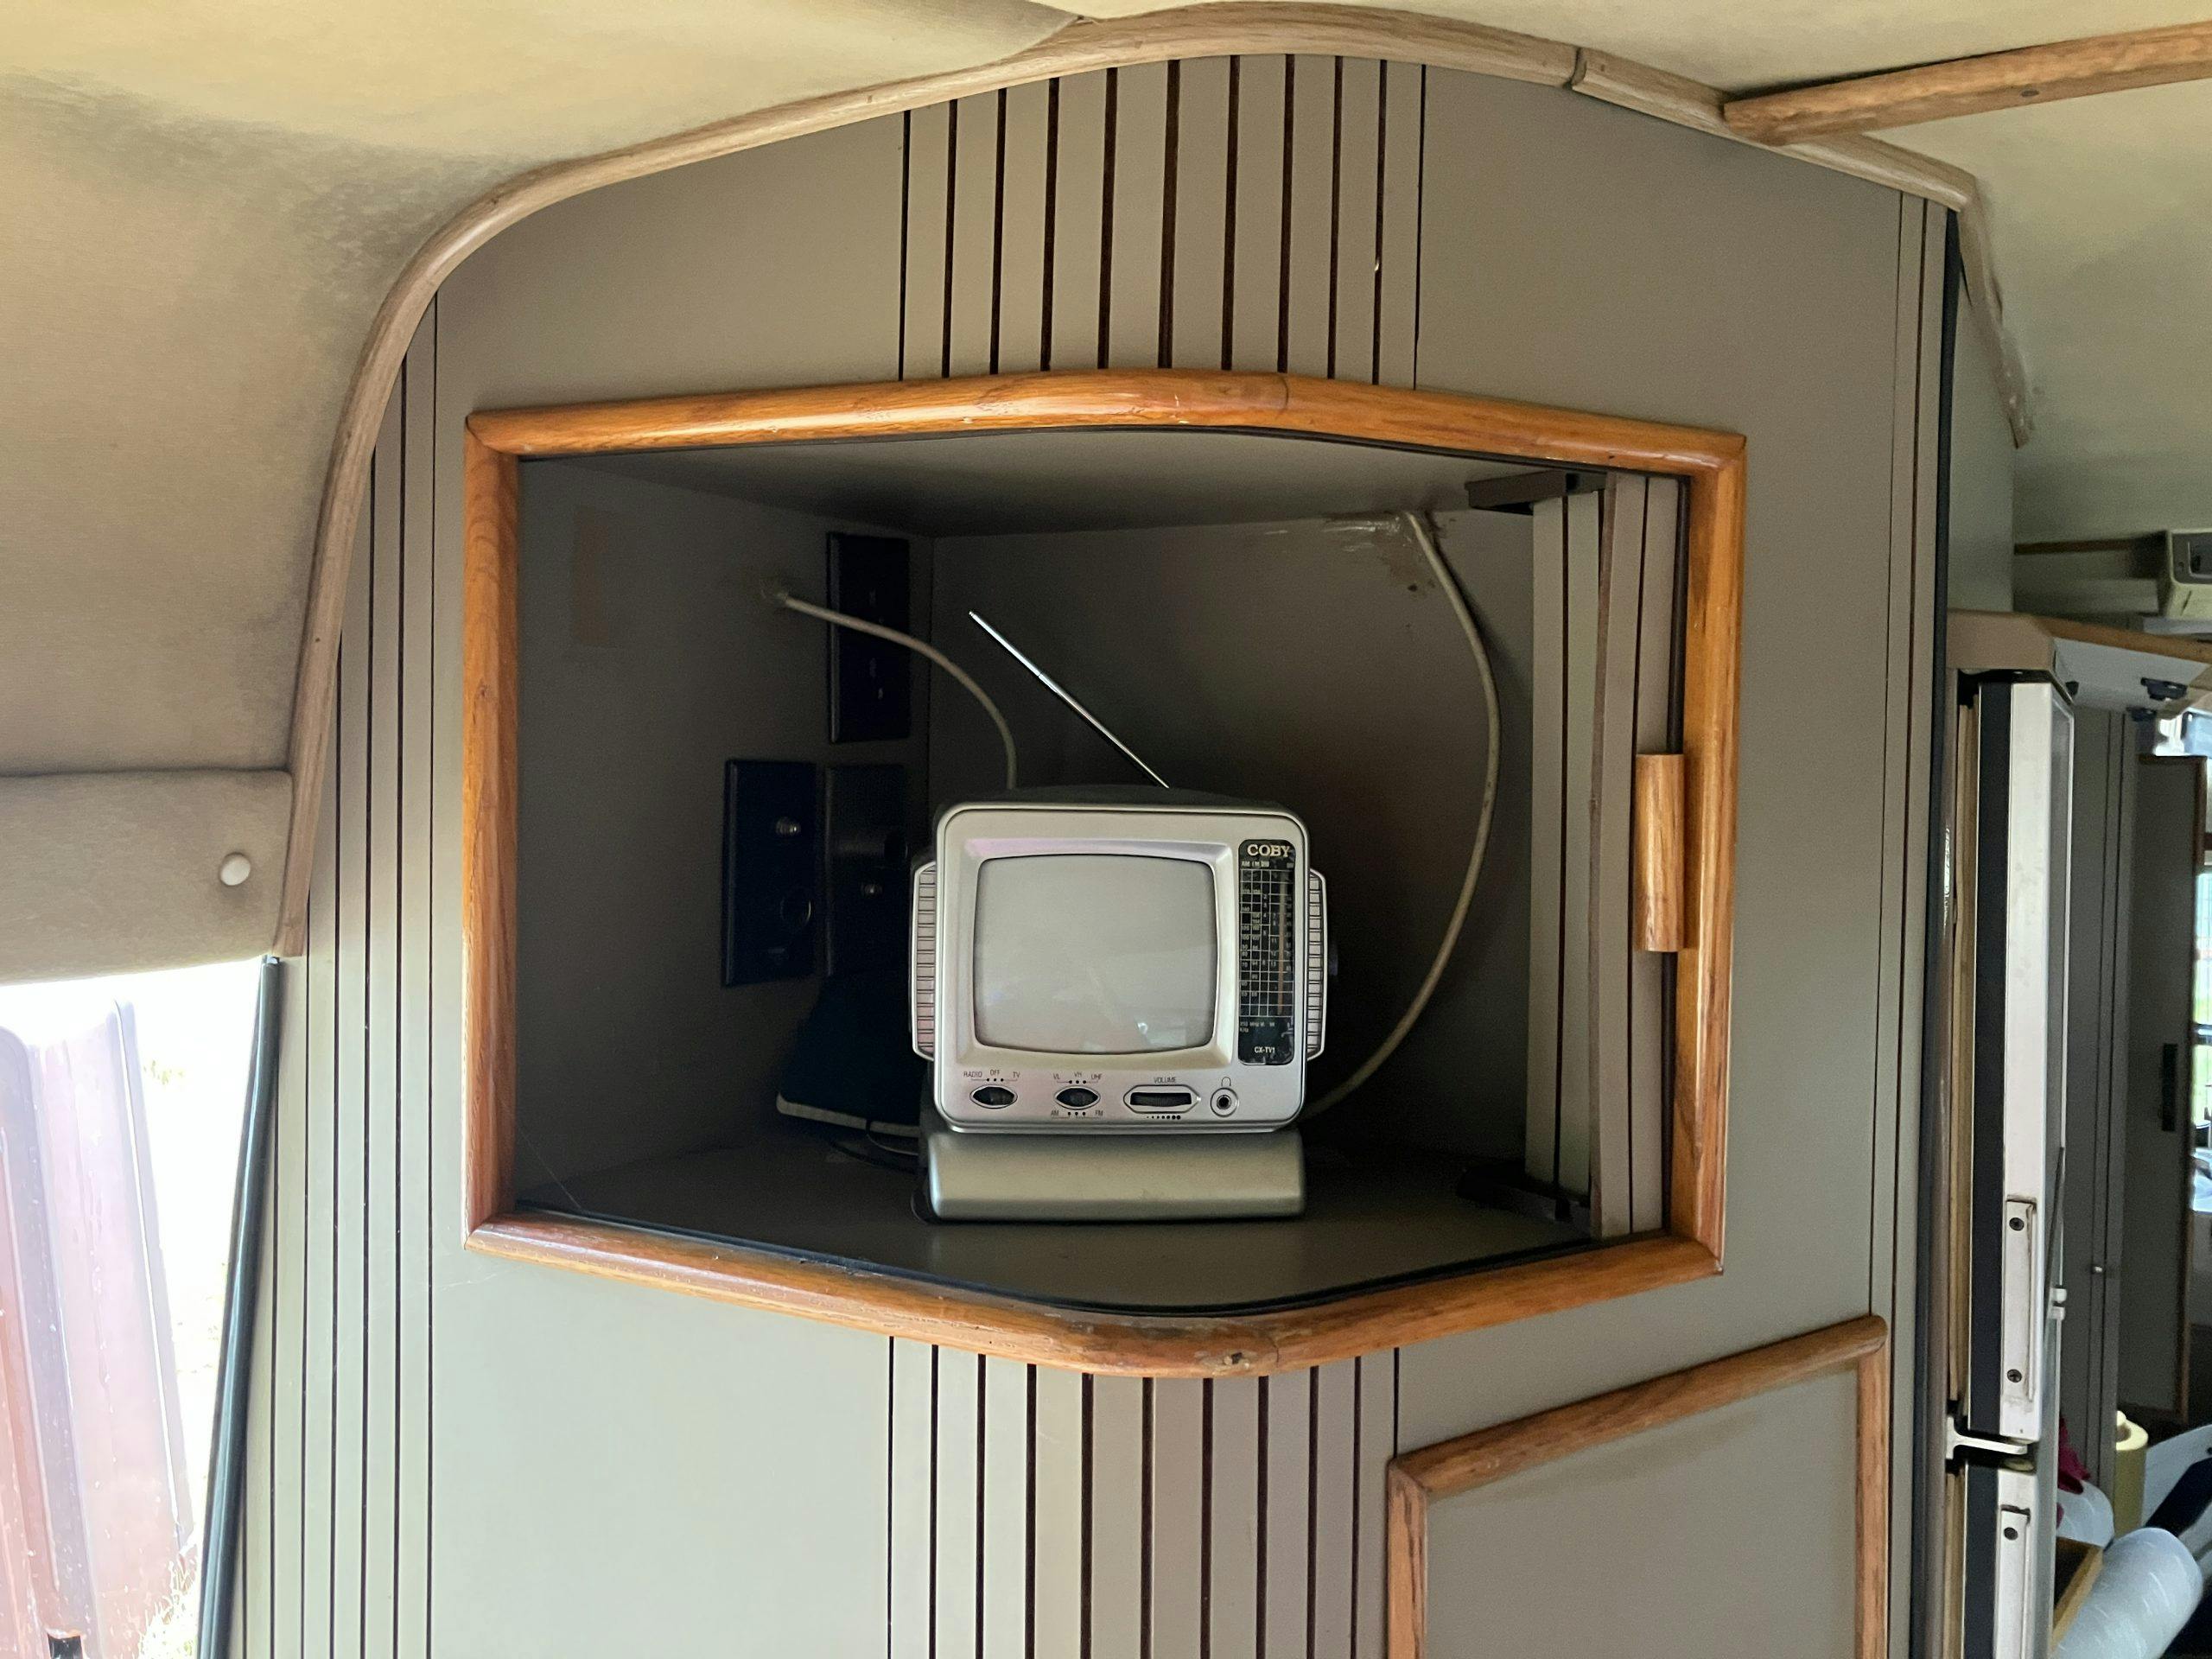 1987 EMC Eldorado Starfire RV interior television